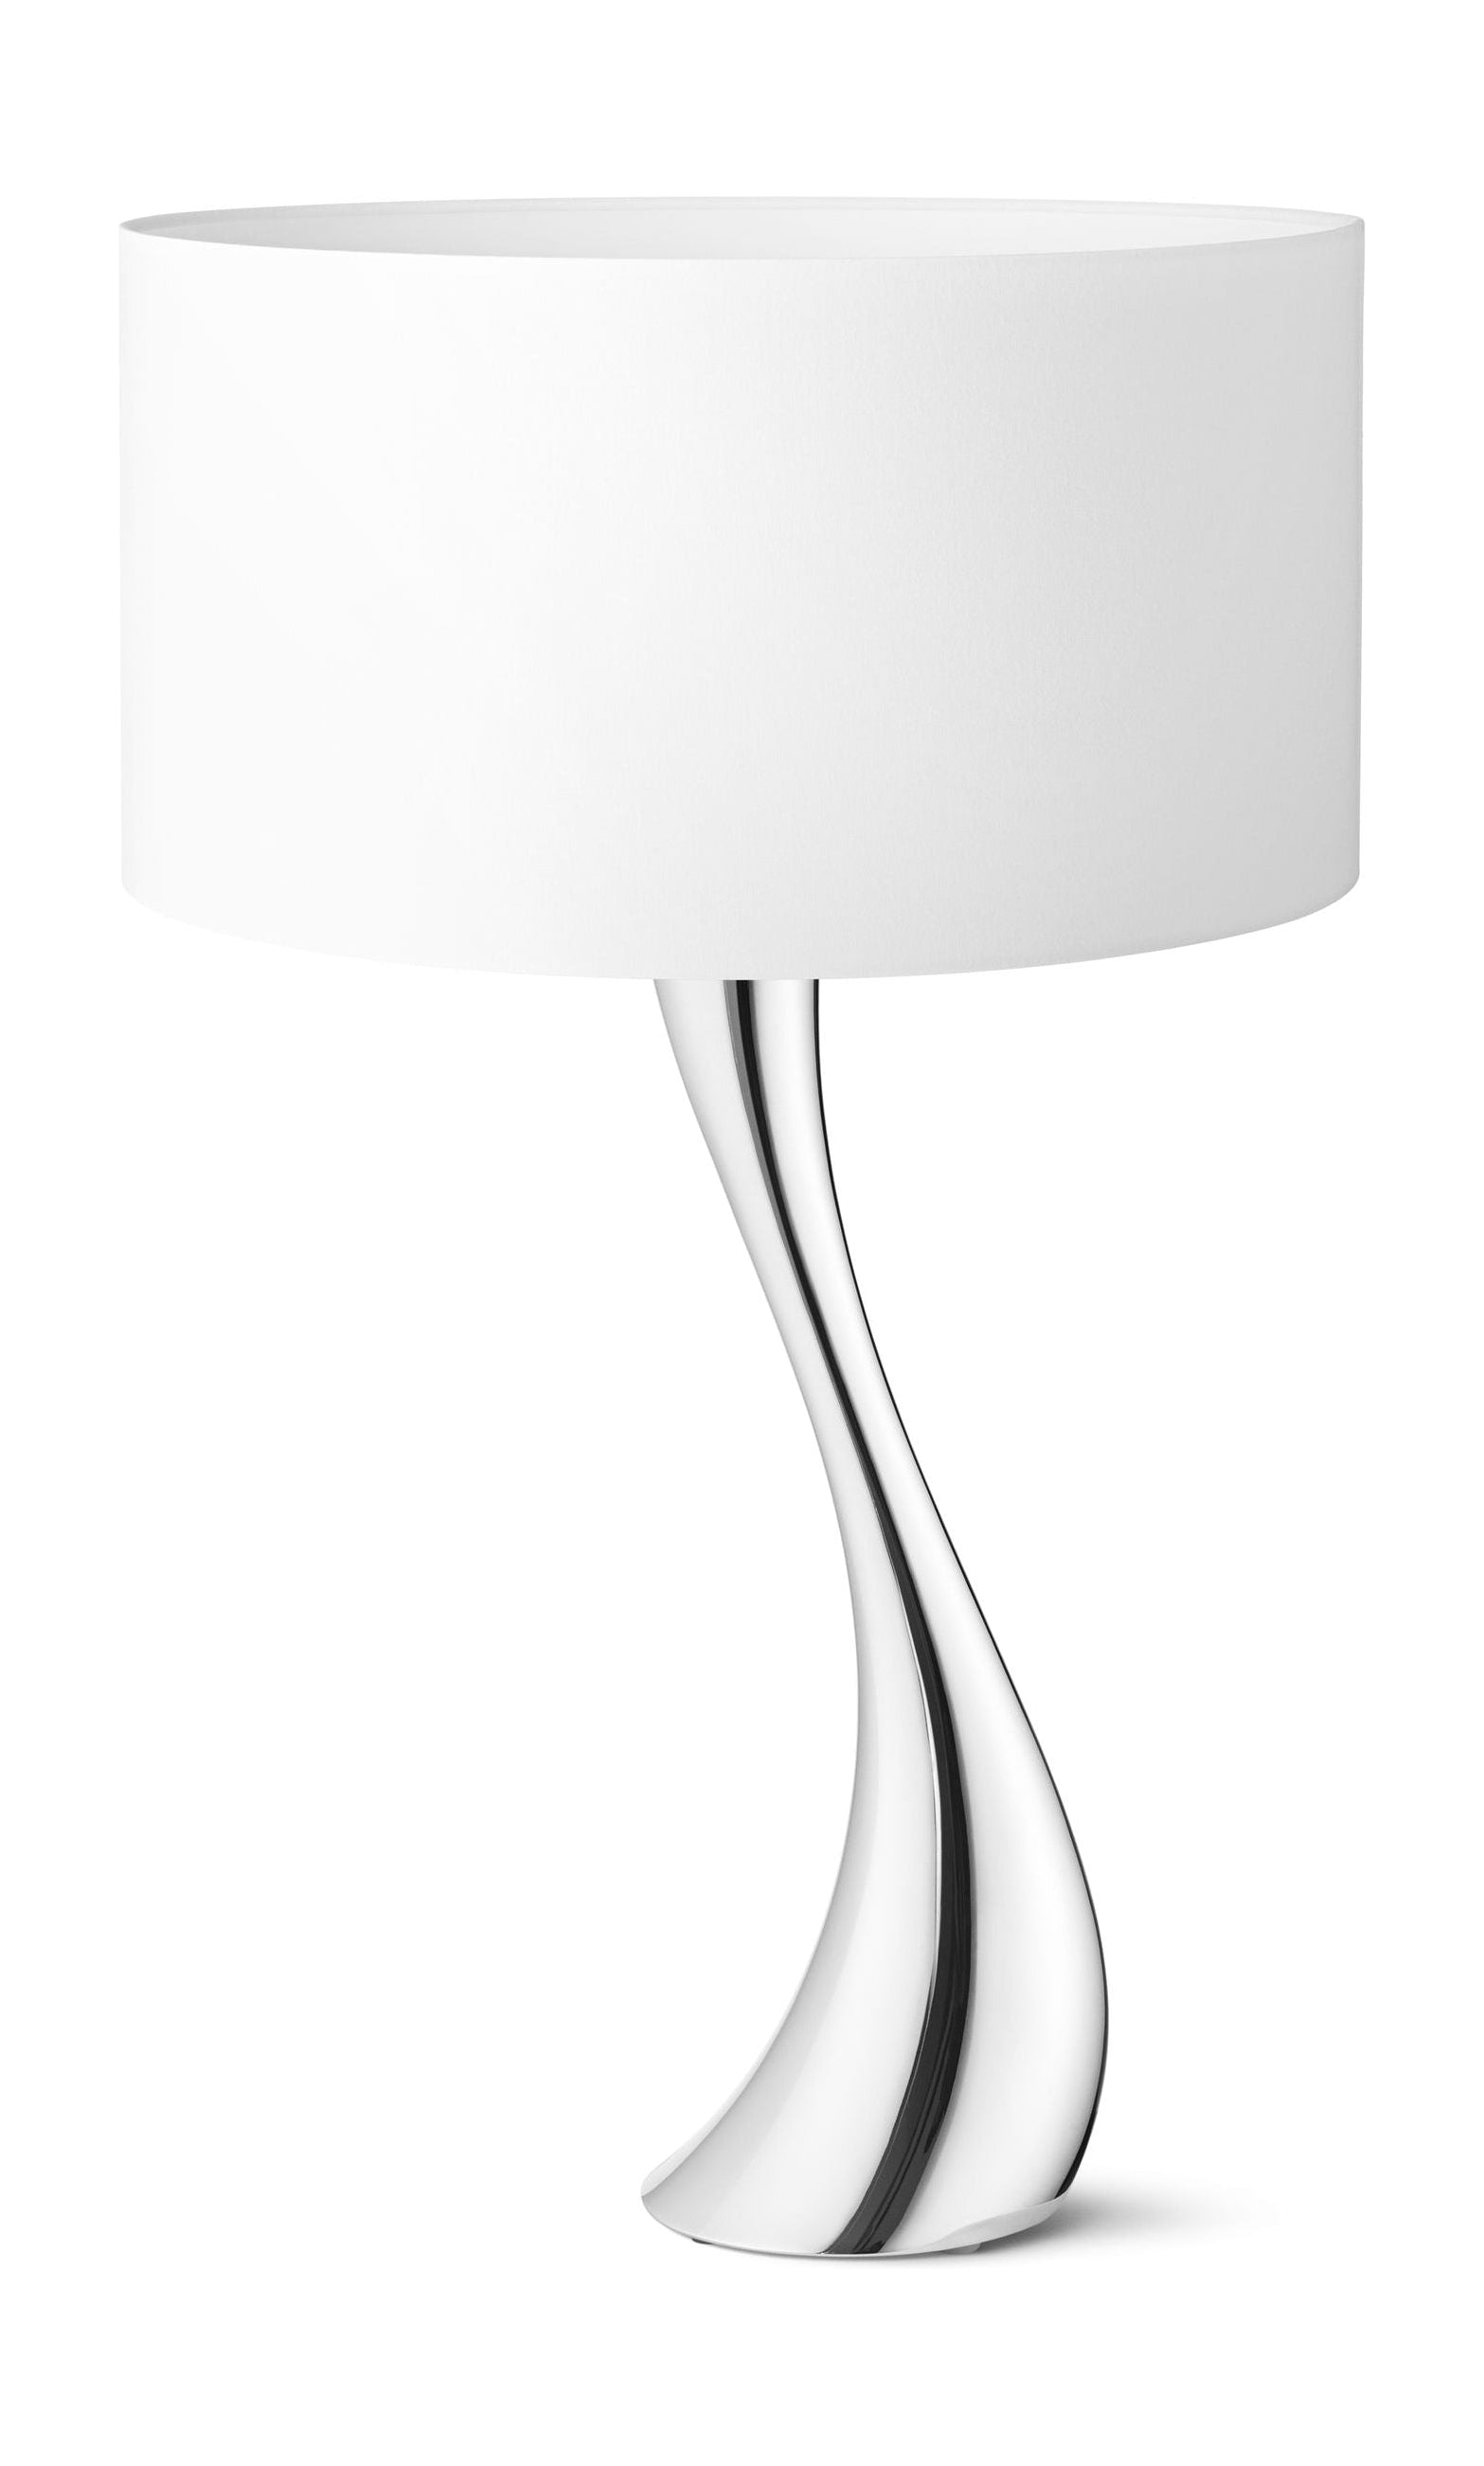 Georg Jensen Cobra lampe blanche, Ø 42 cm